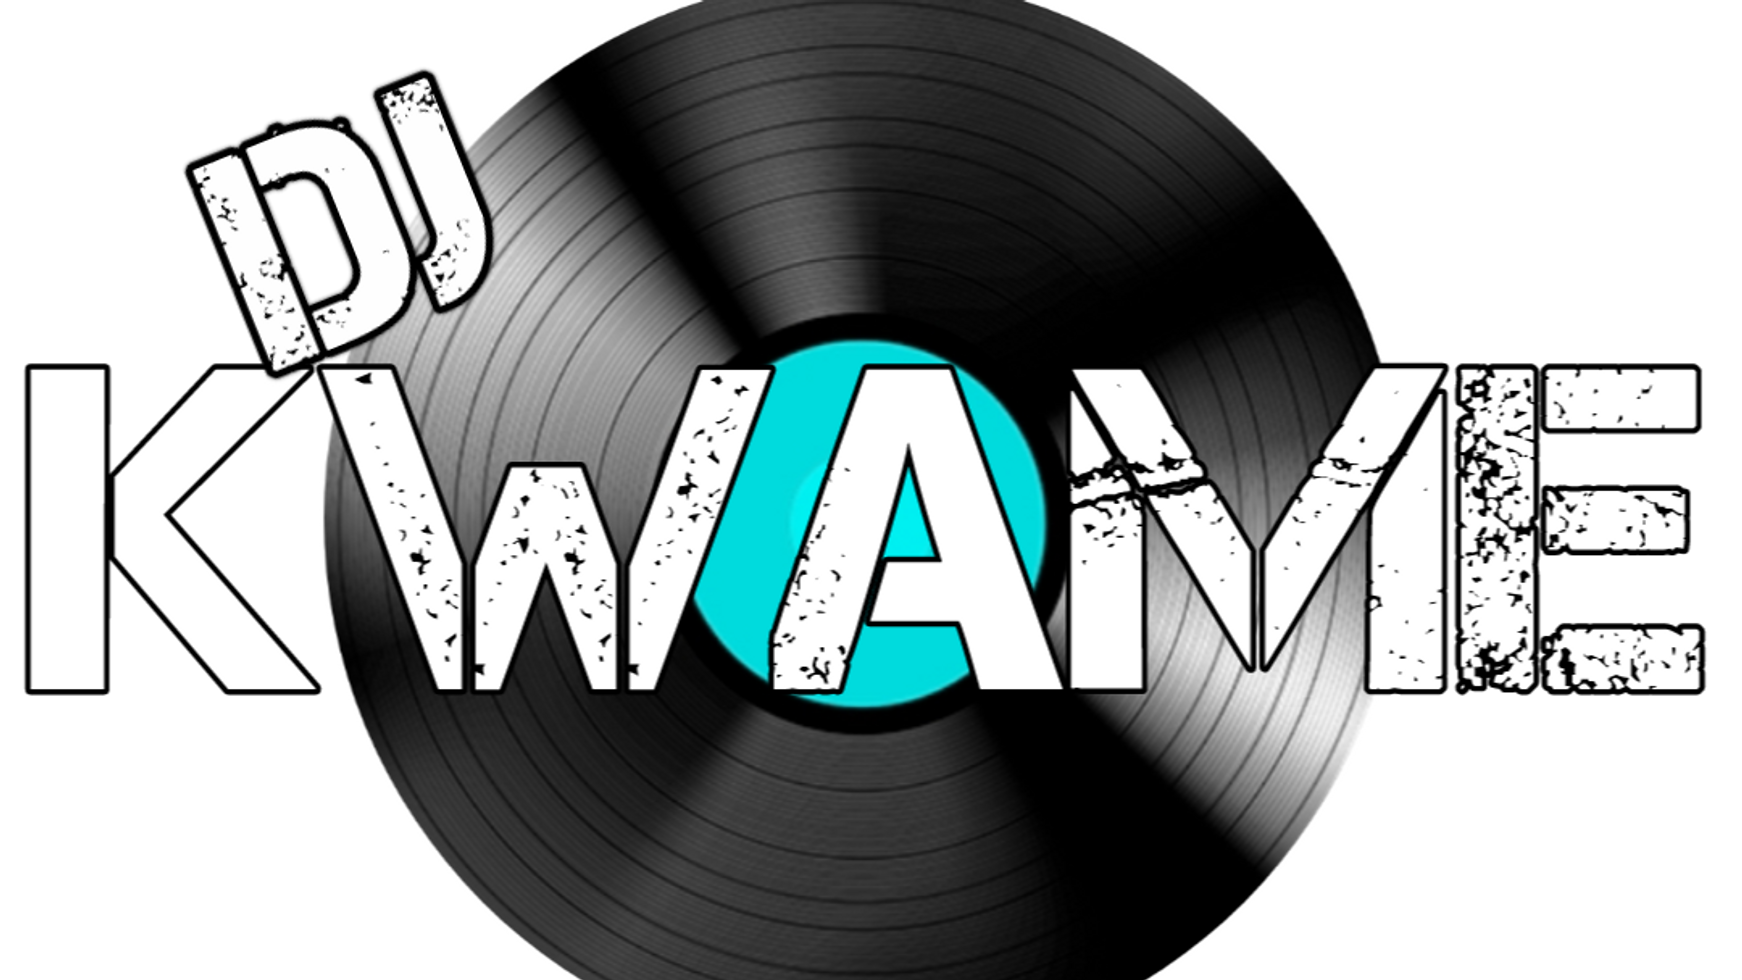 DJ Kwame Live